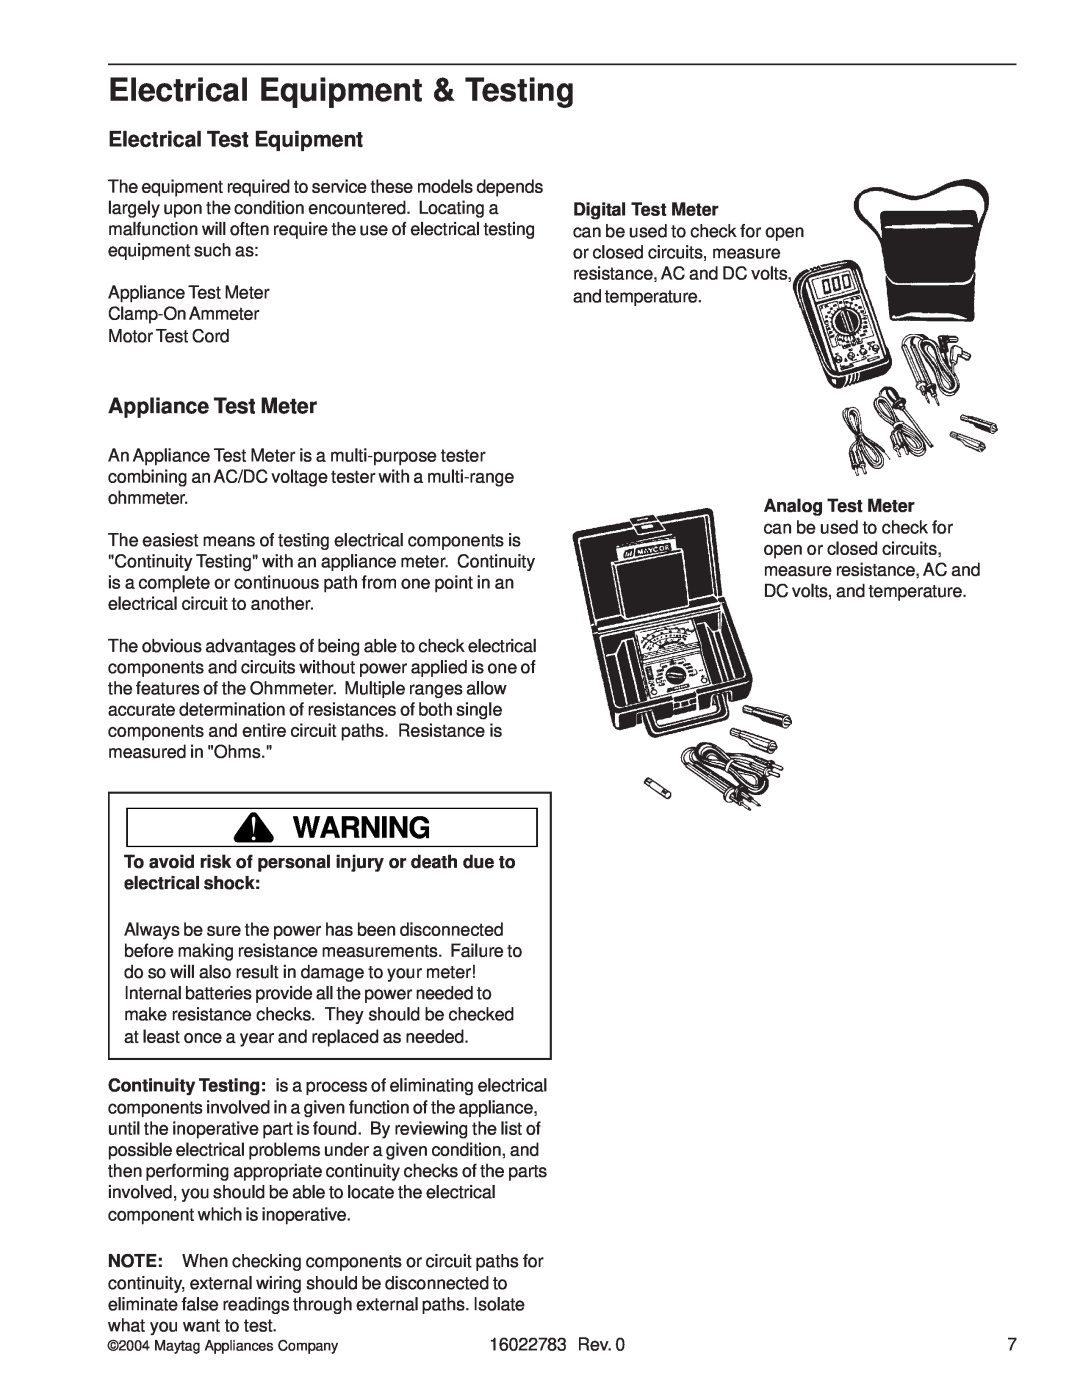 Maytag MDB9750AW manual Electrical Equipment & Testing, Electrical Test Equipment, Appliance Test Meter, Digital Test Meter 